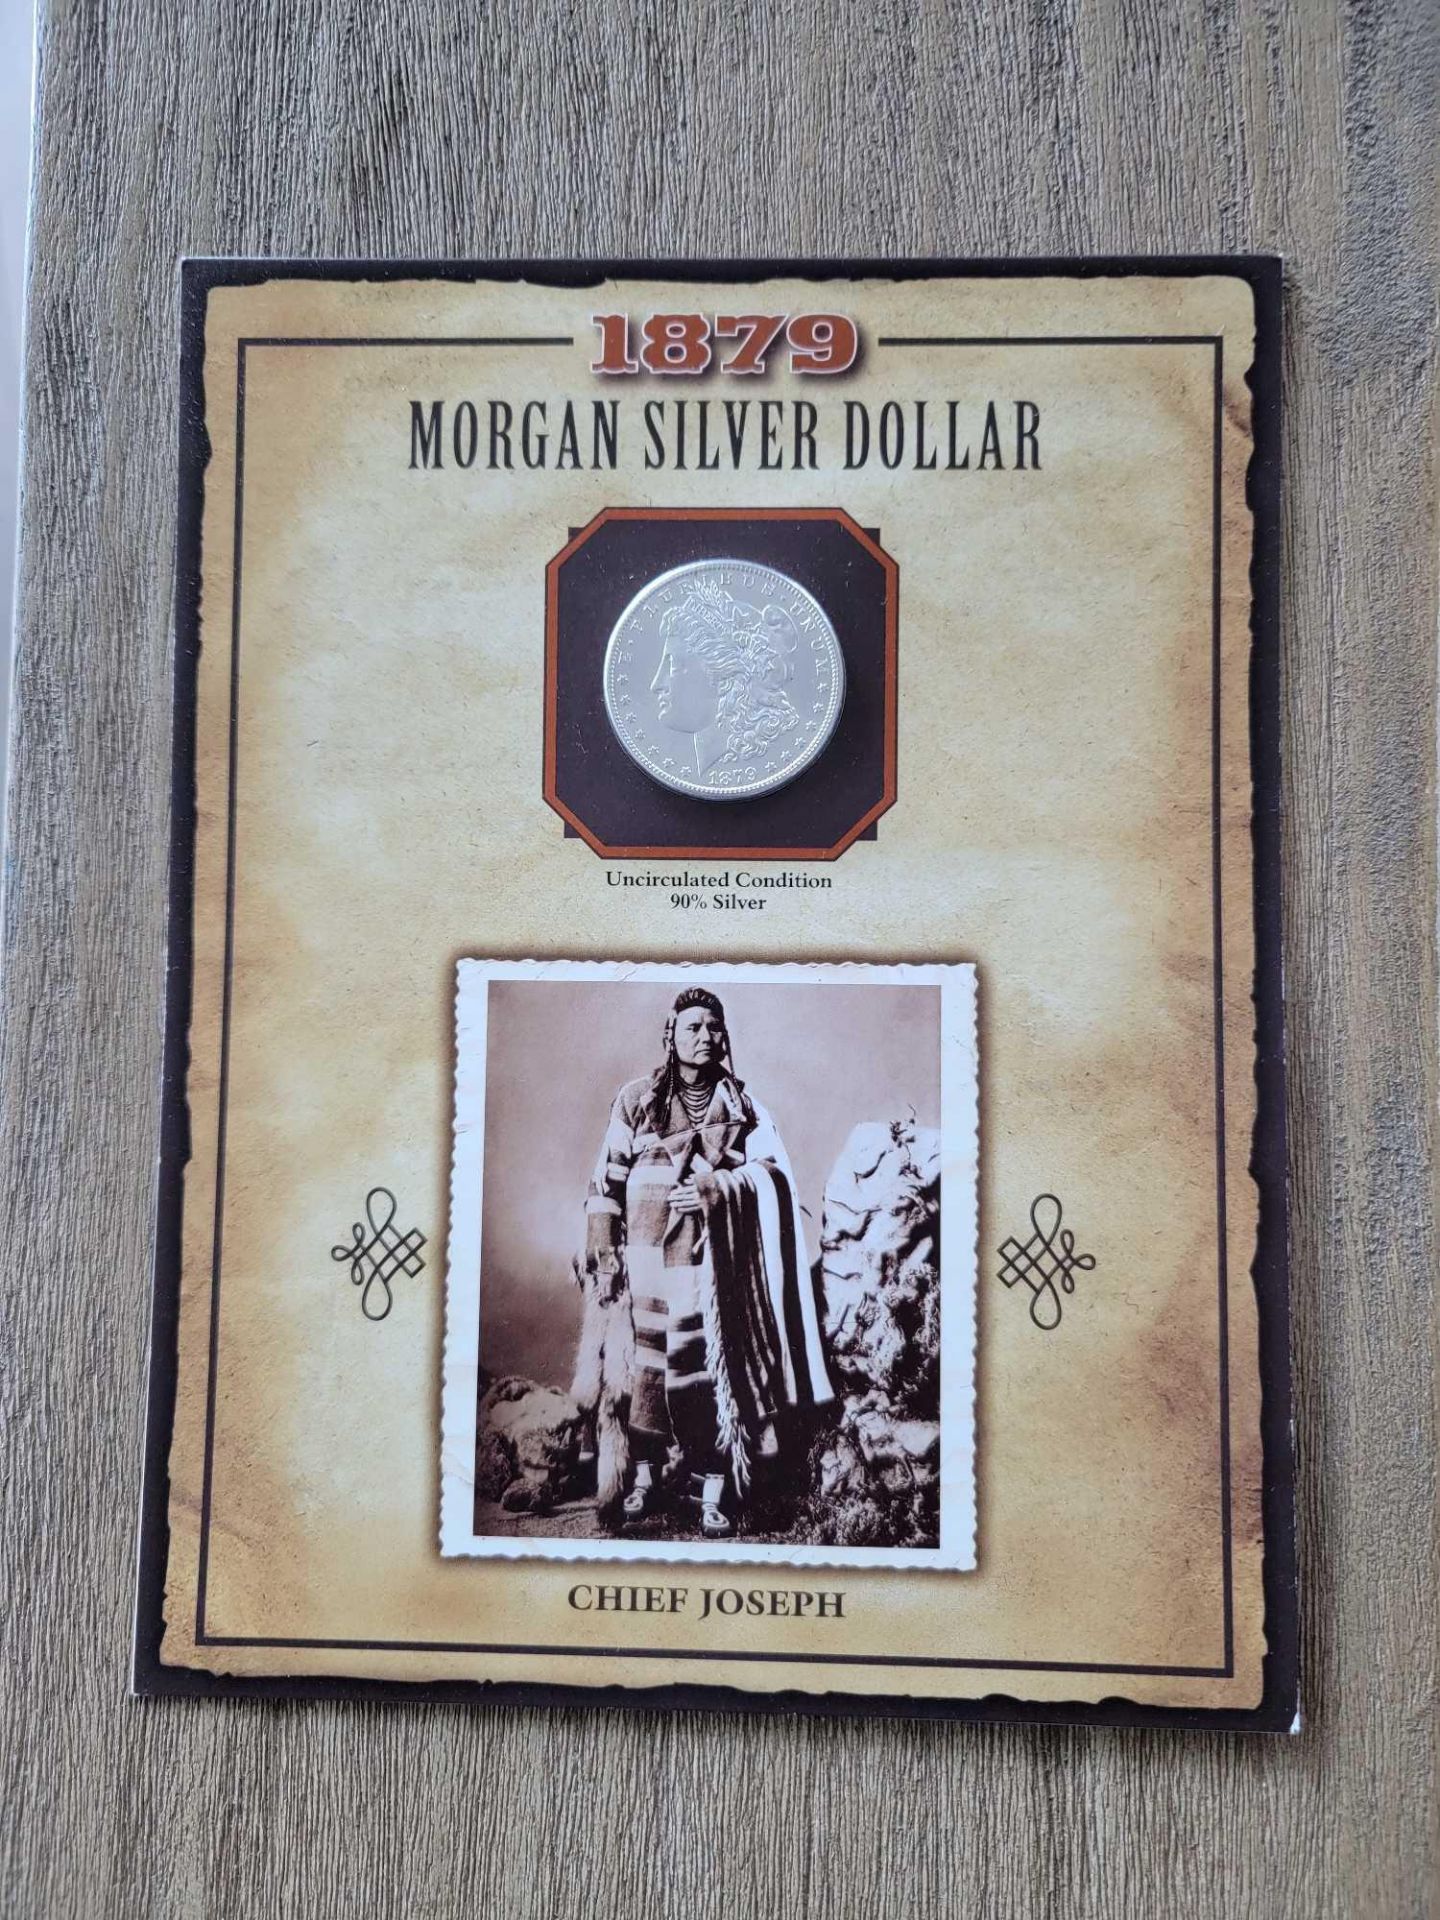 1879 Morgan Dollar with Chief Joseph Uncirculated Condition